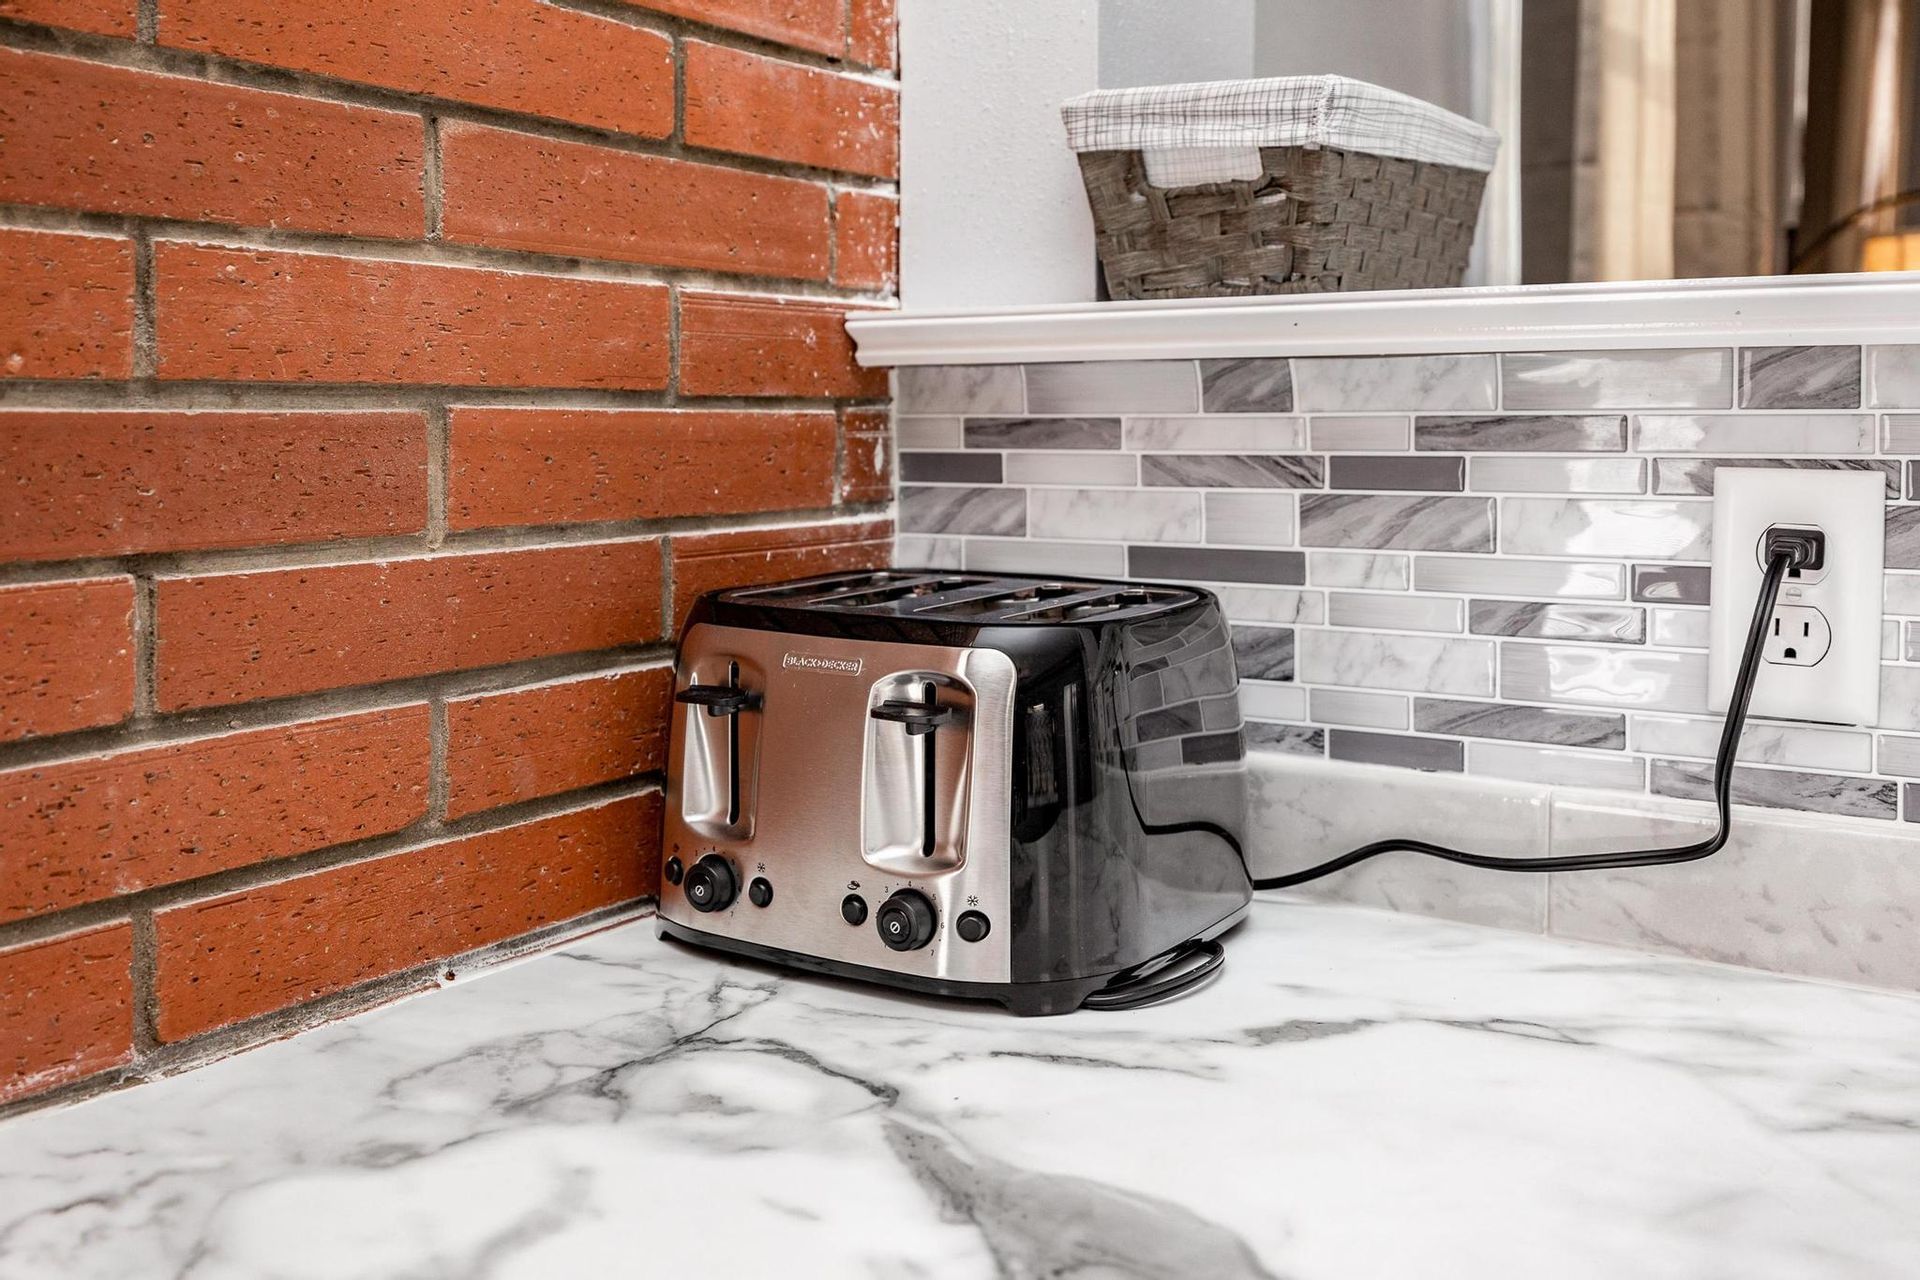 Mount Vernon house kitchen toaster